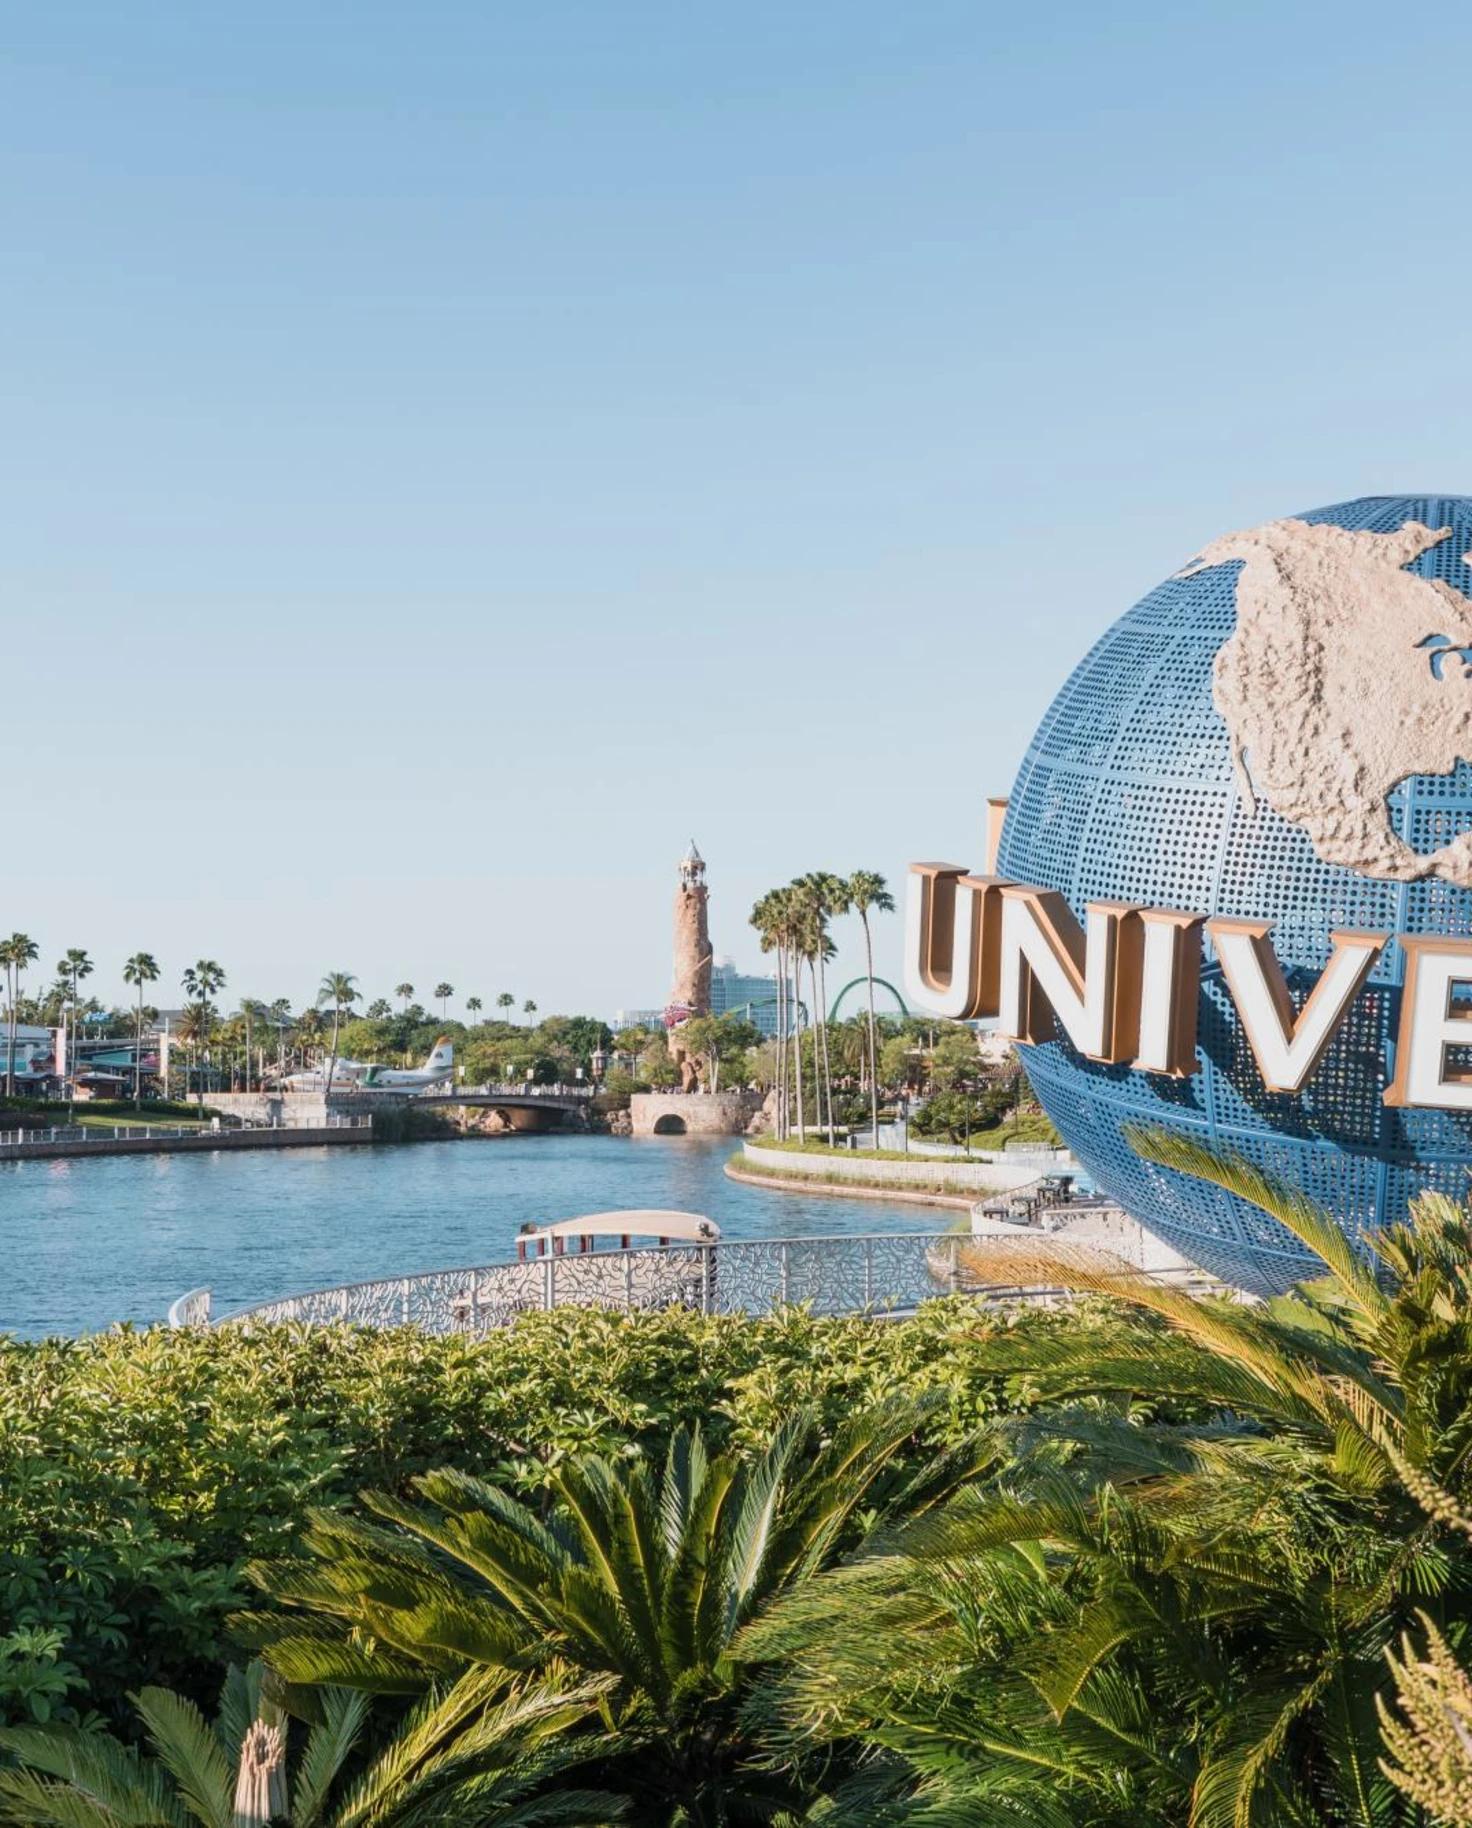 Universal Studios globe in front of water